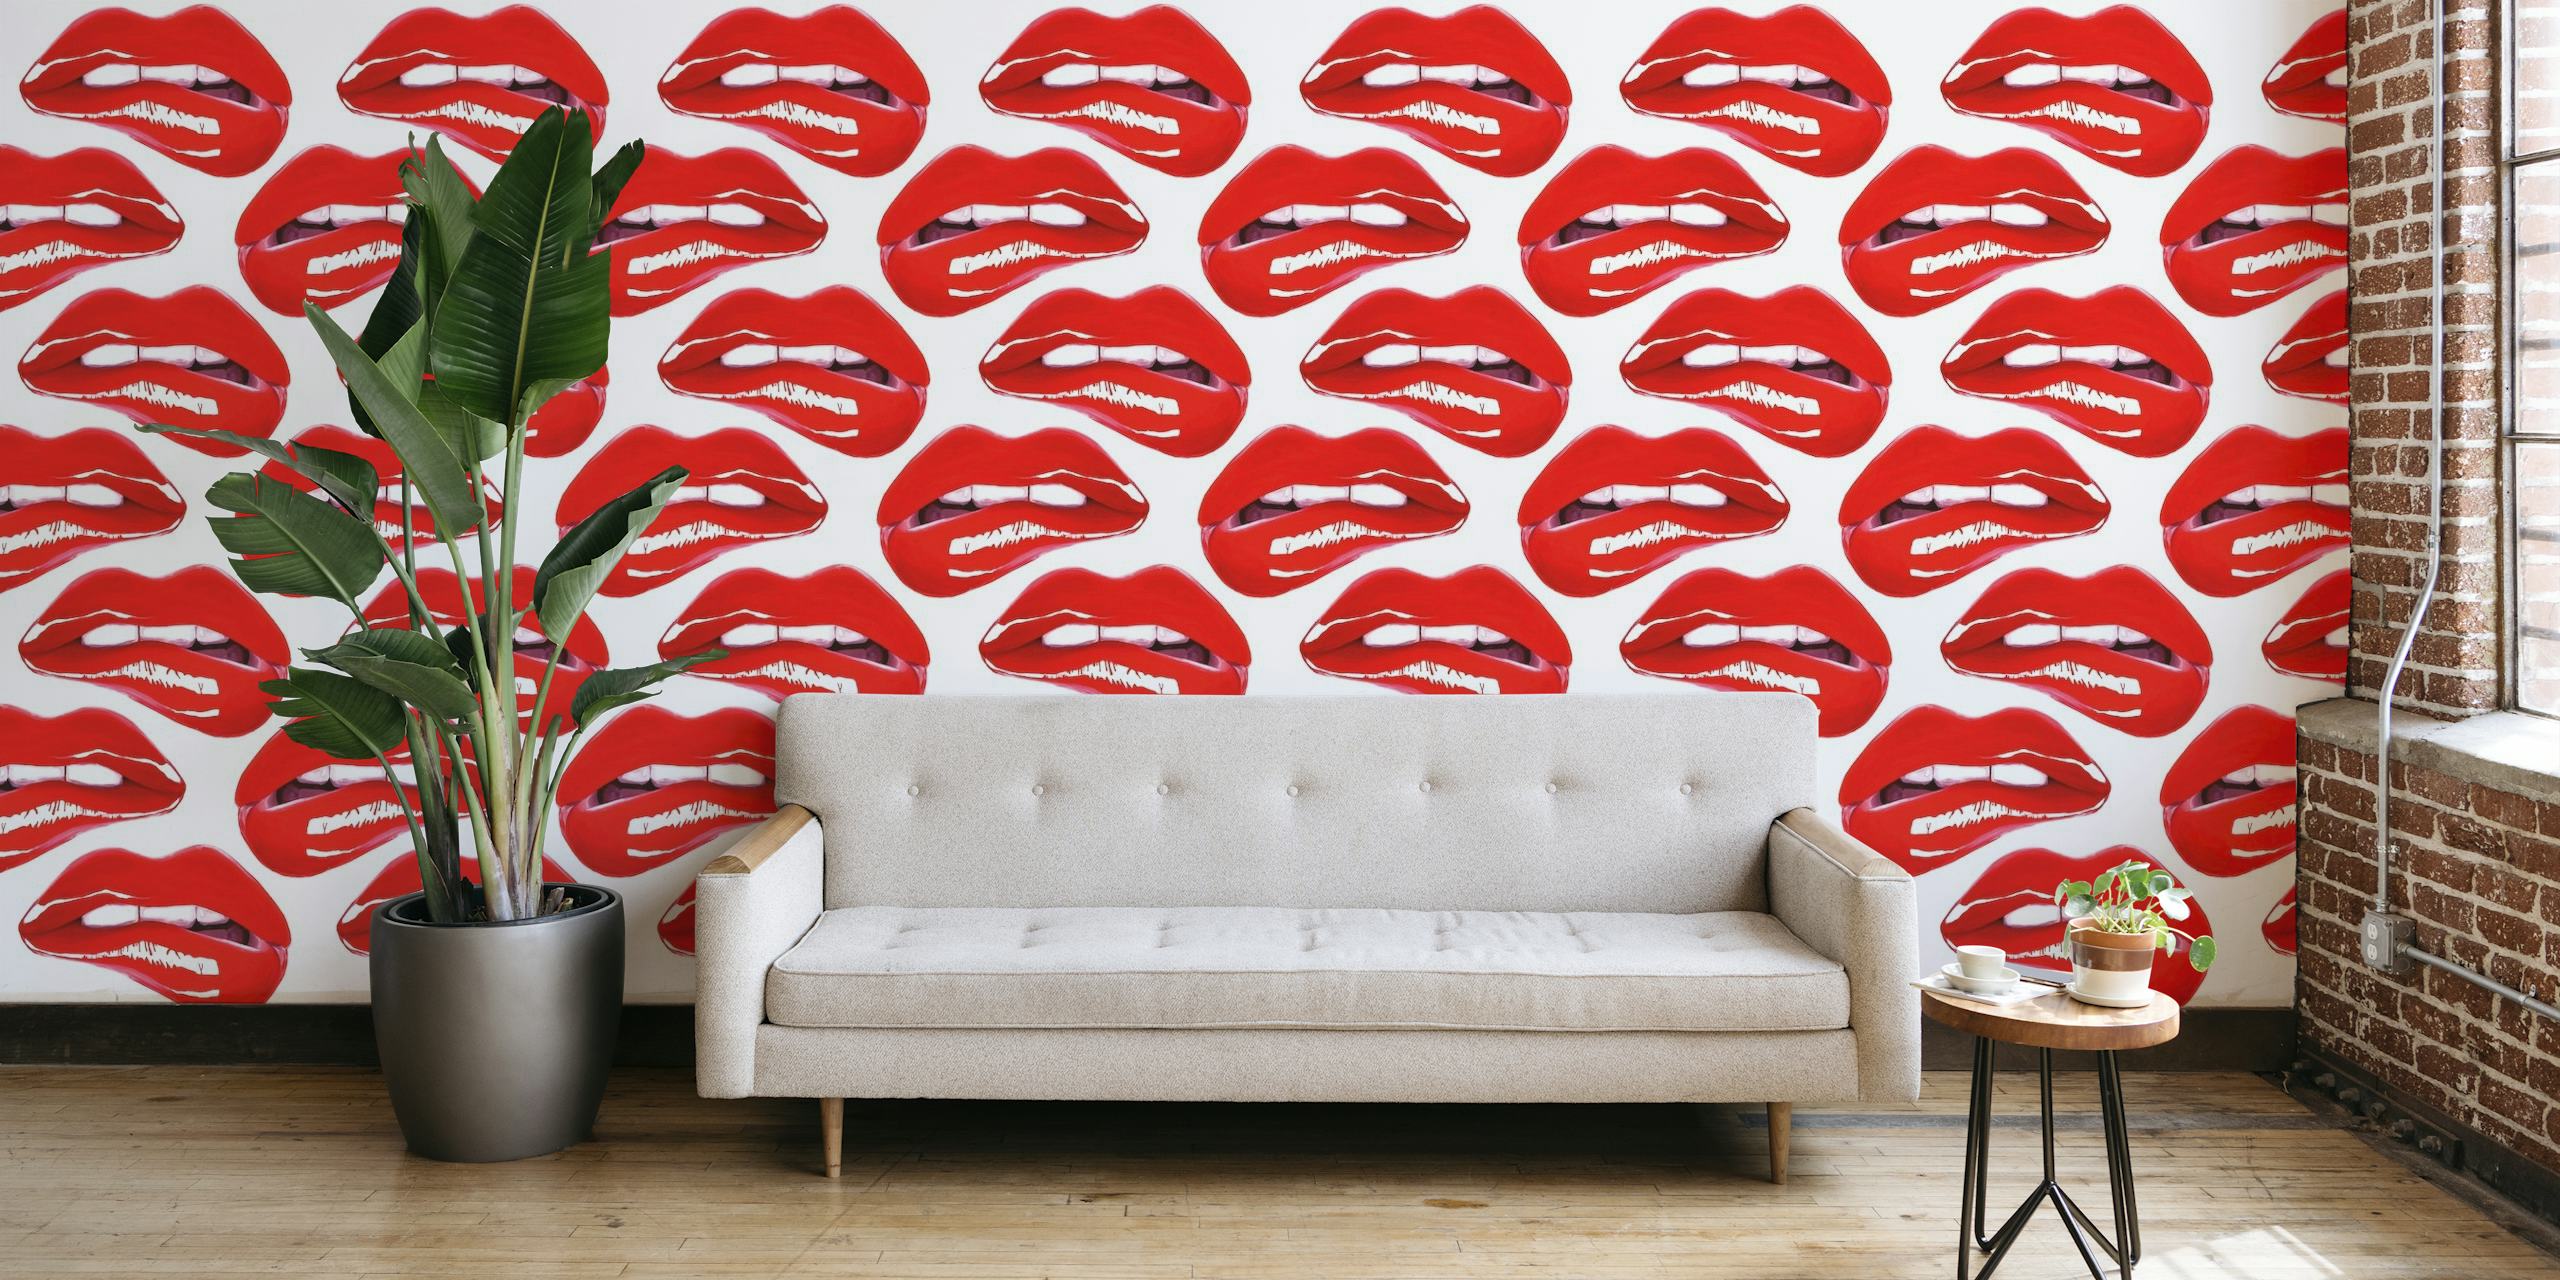 Red lips wallpaper